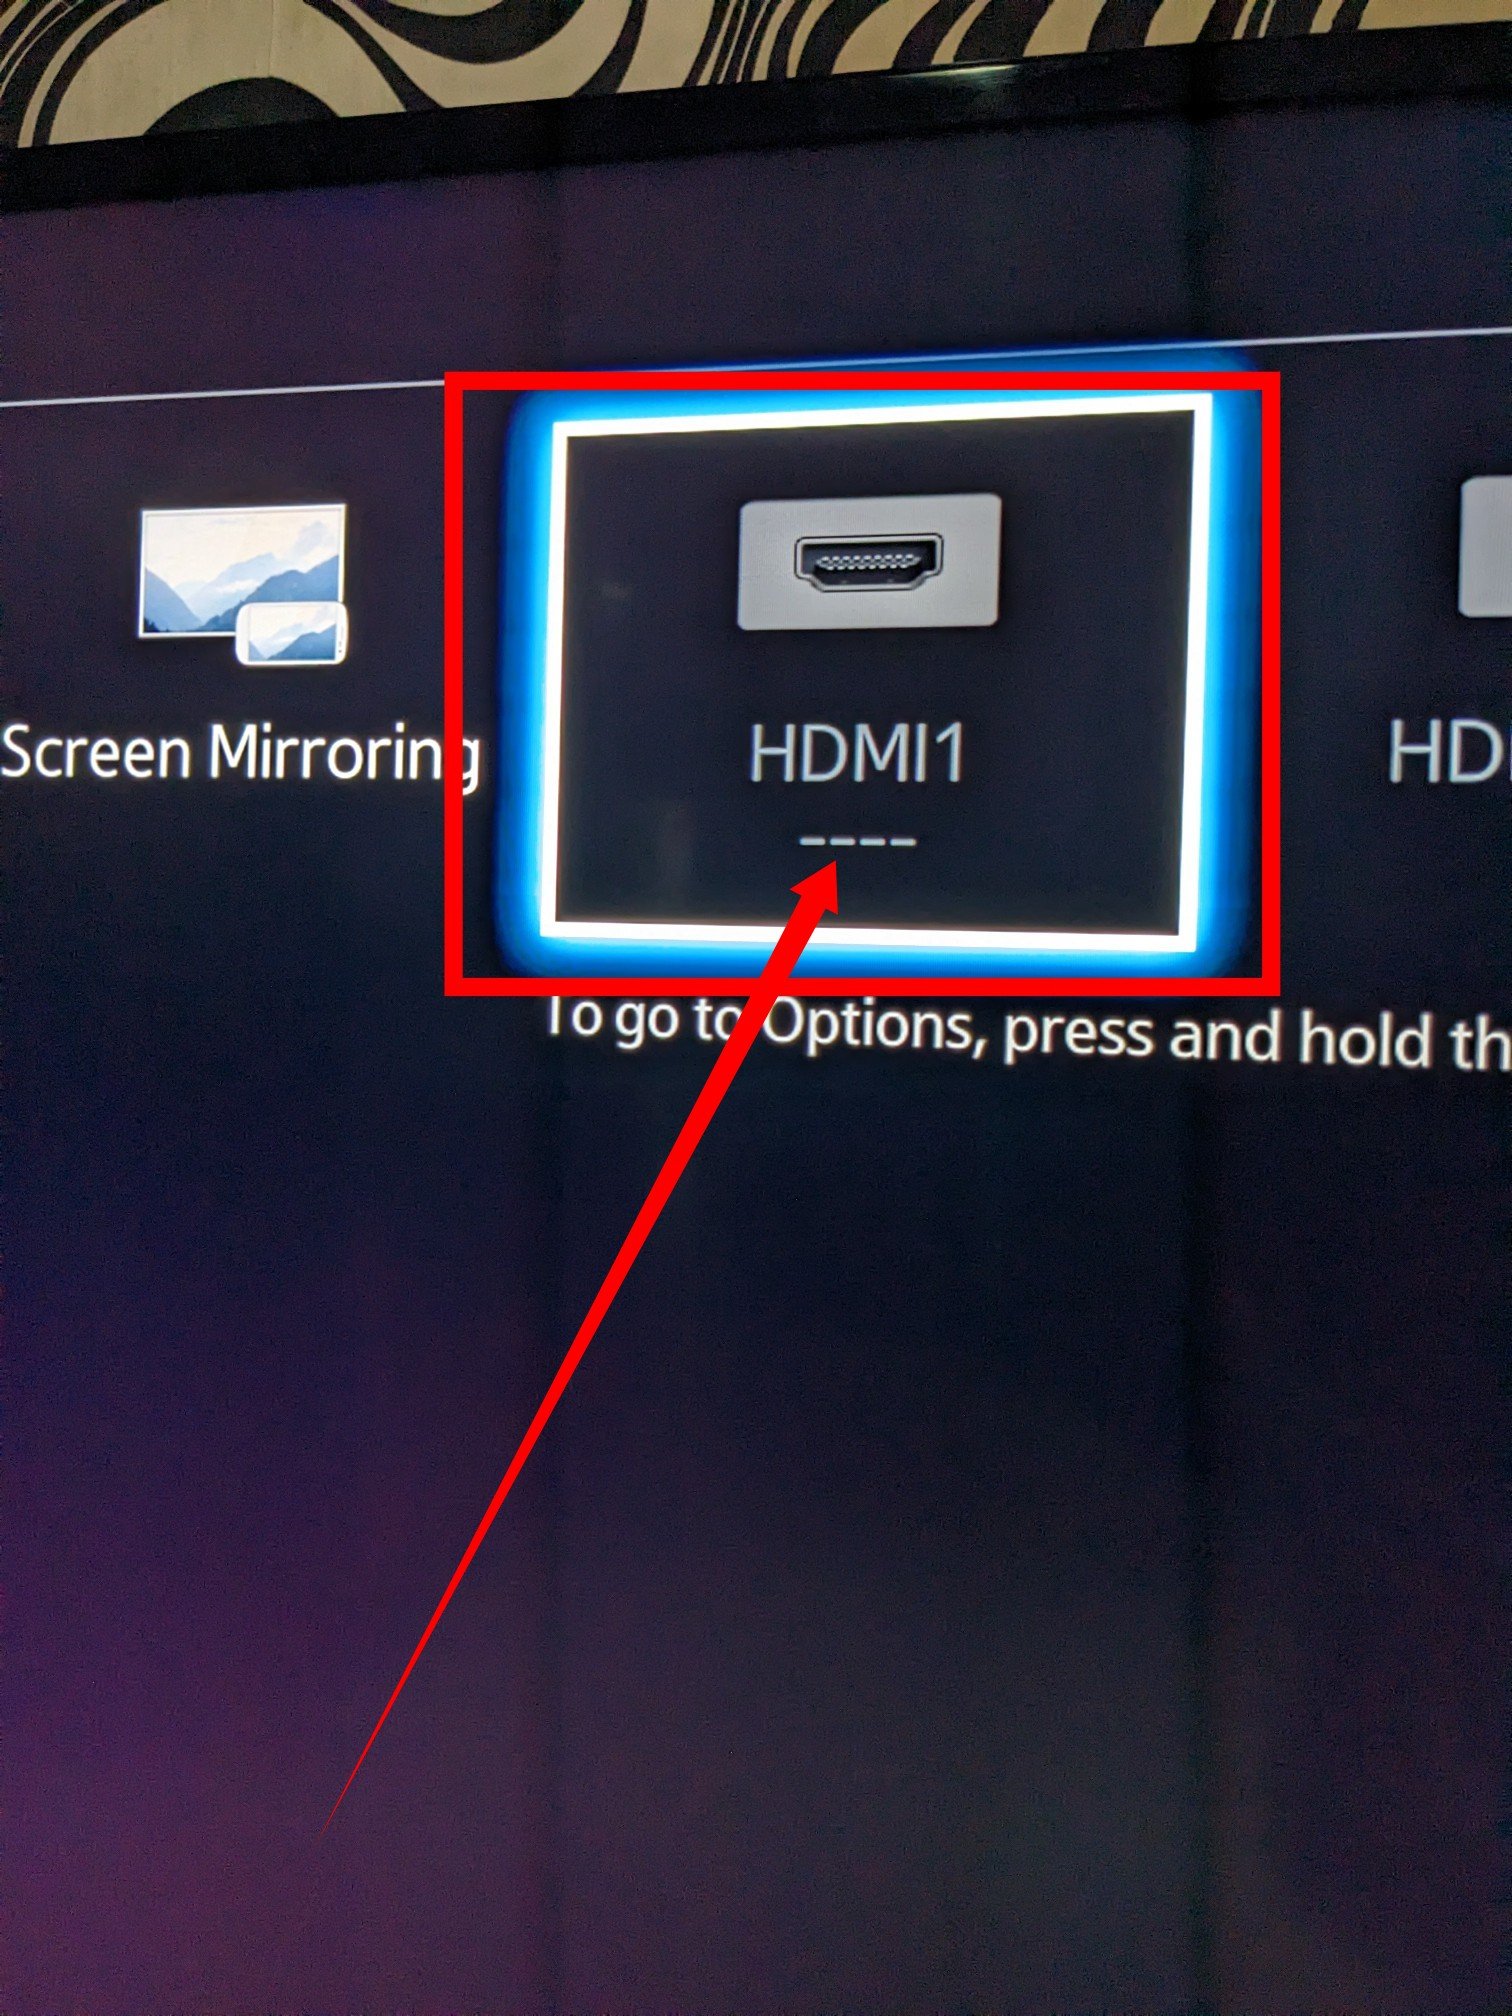 HDMI source on Samsung smart TV 